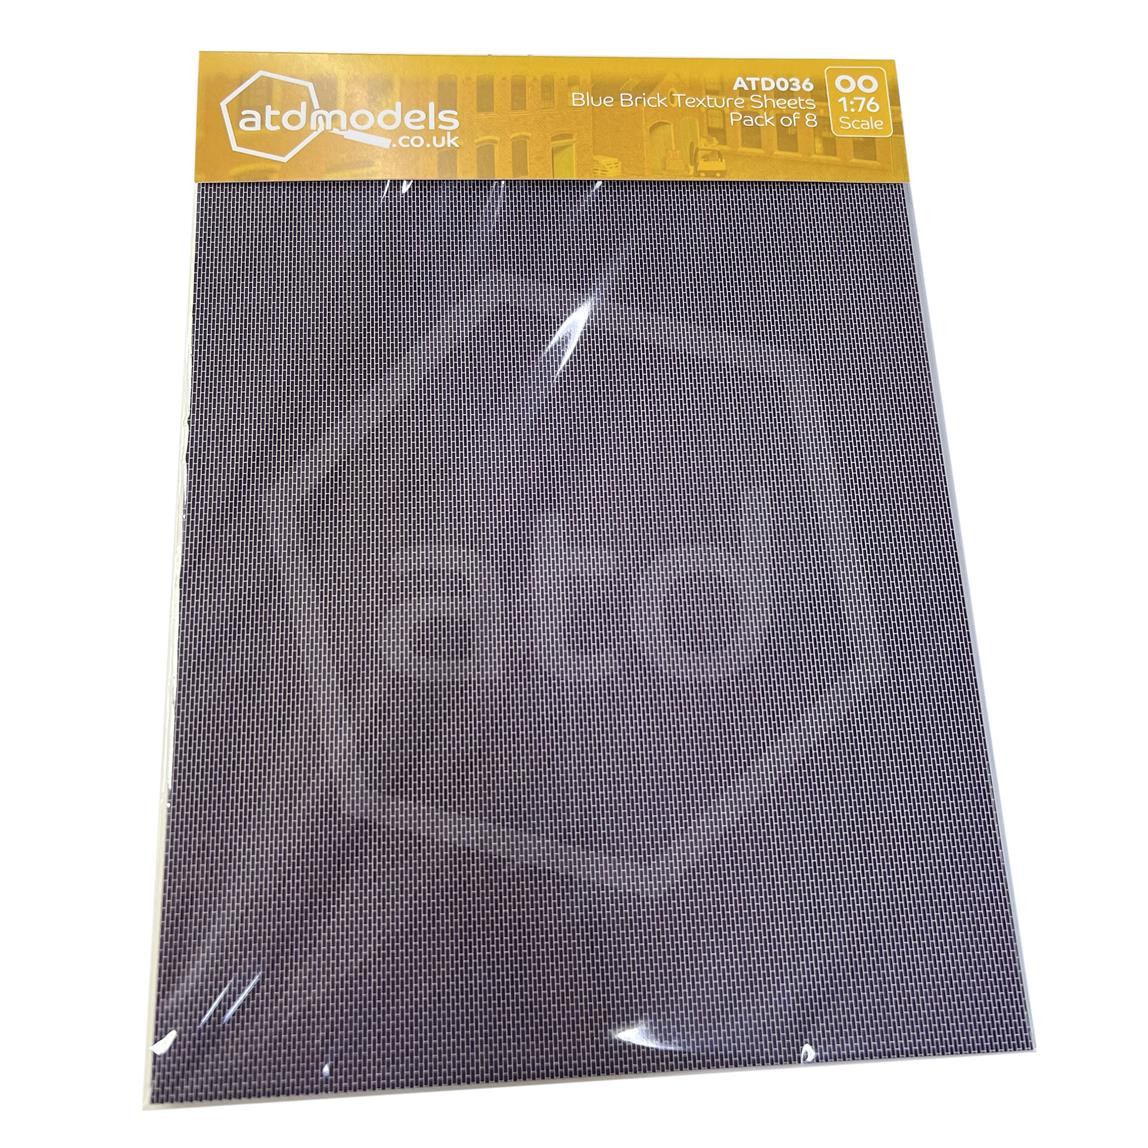 ATD036 ATD Models Blue Brick Texture Pack (8 x A4 Sheets)